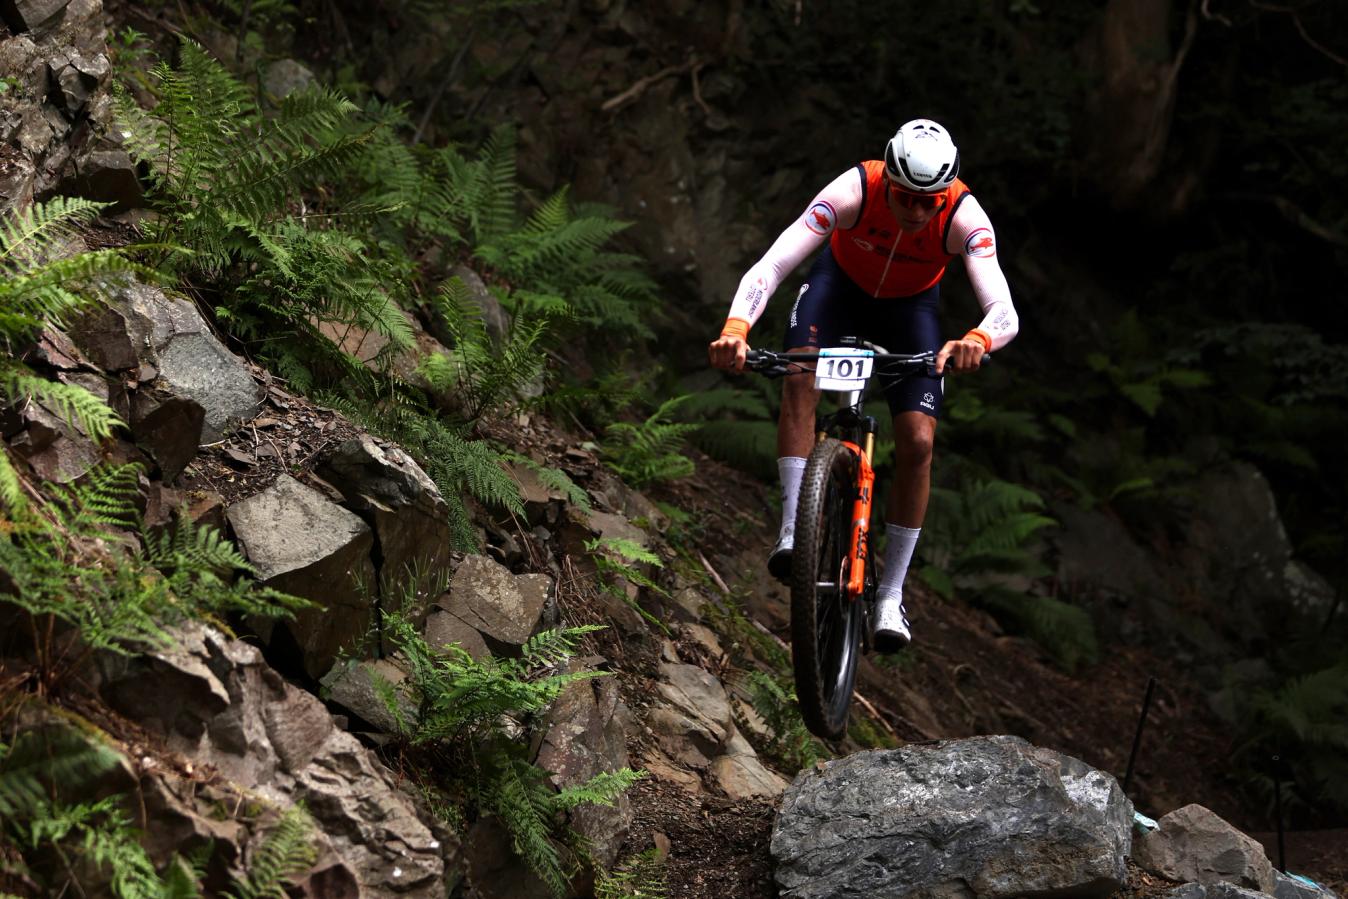 Mathieu van der Poel will still start the cross-country mountain bike race on Saturday.